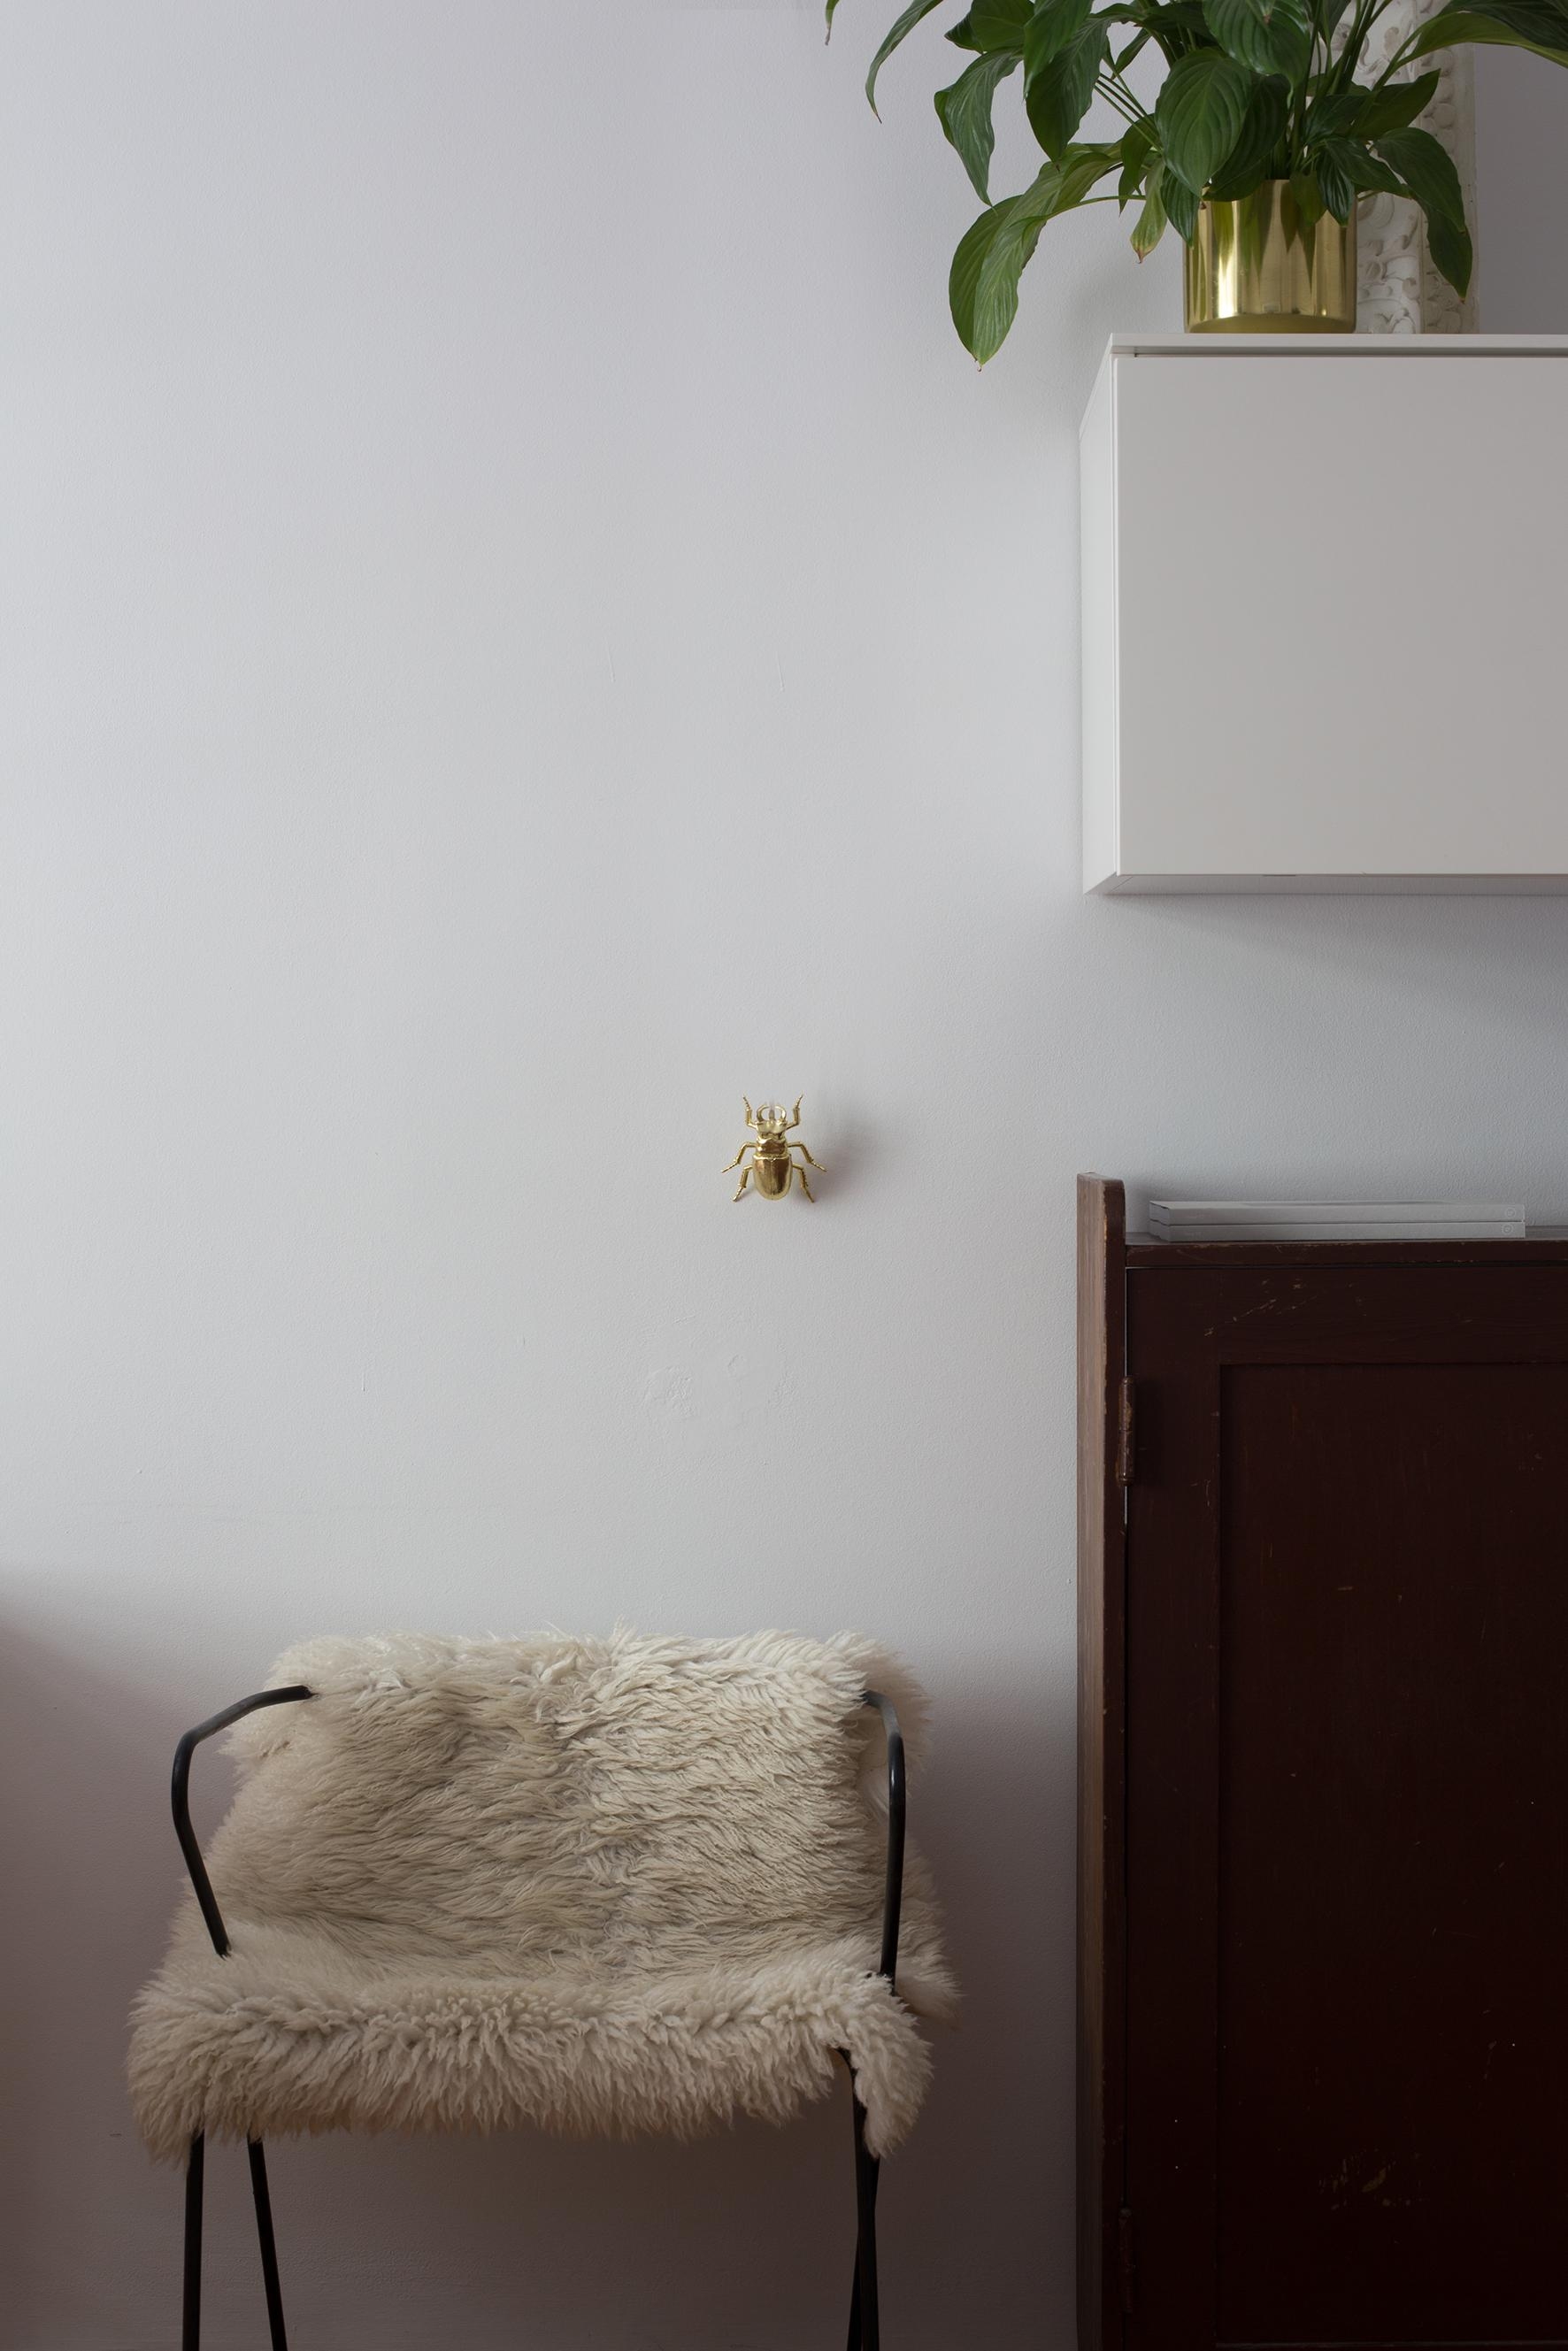 kribbel.krabbel.käfer. #deko #wanddeko #vintage #haustier #wohnzimmer